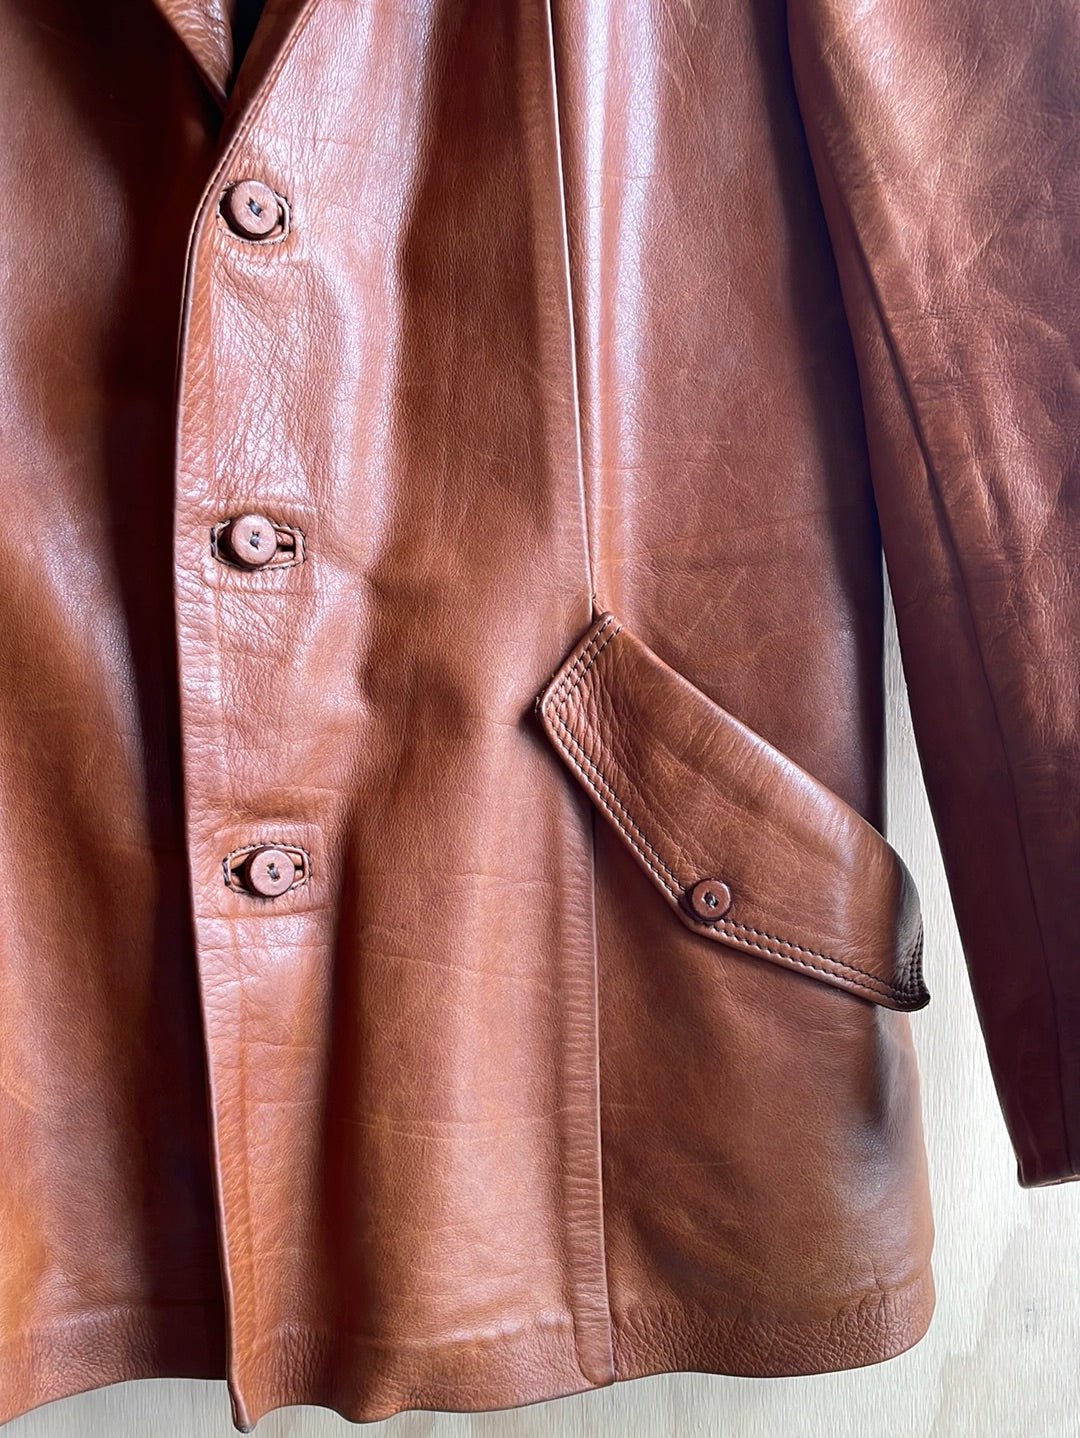 Vintage Leather Blazer